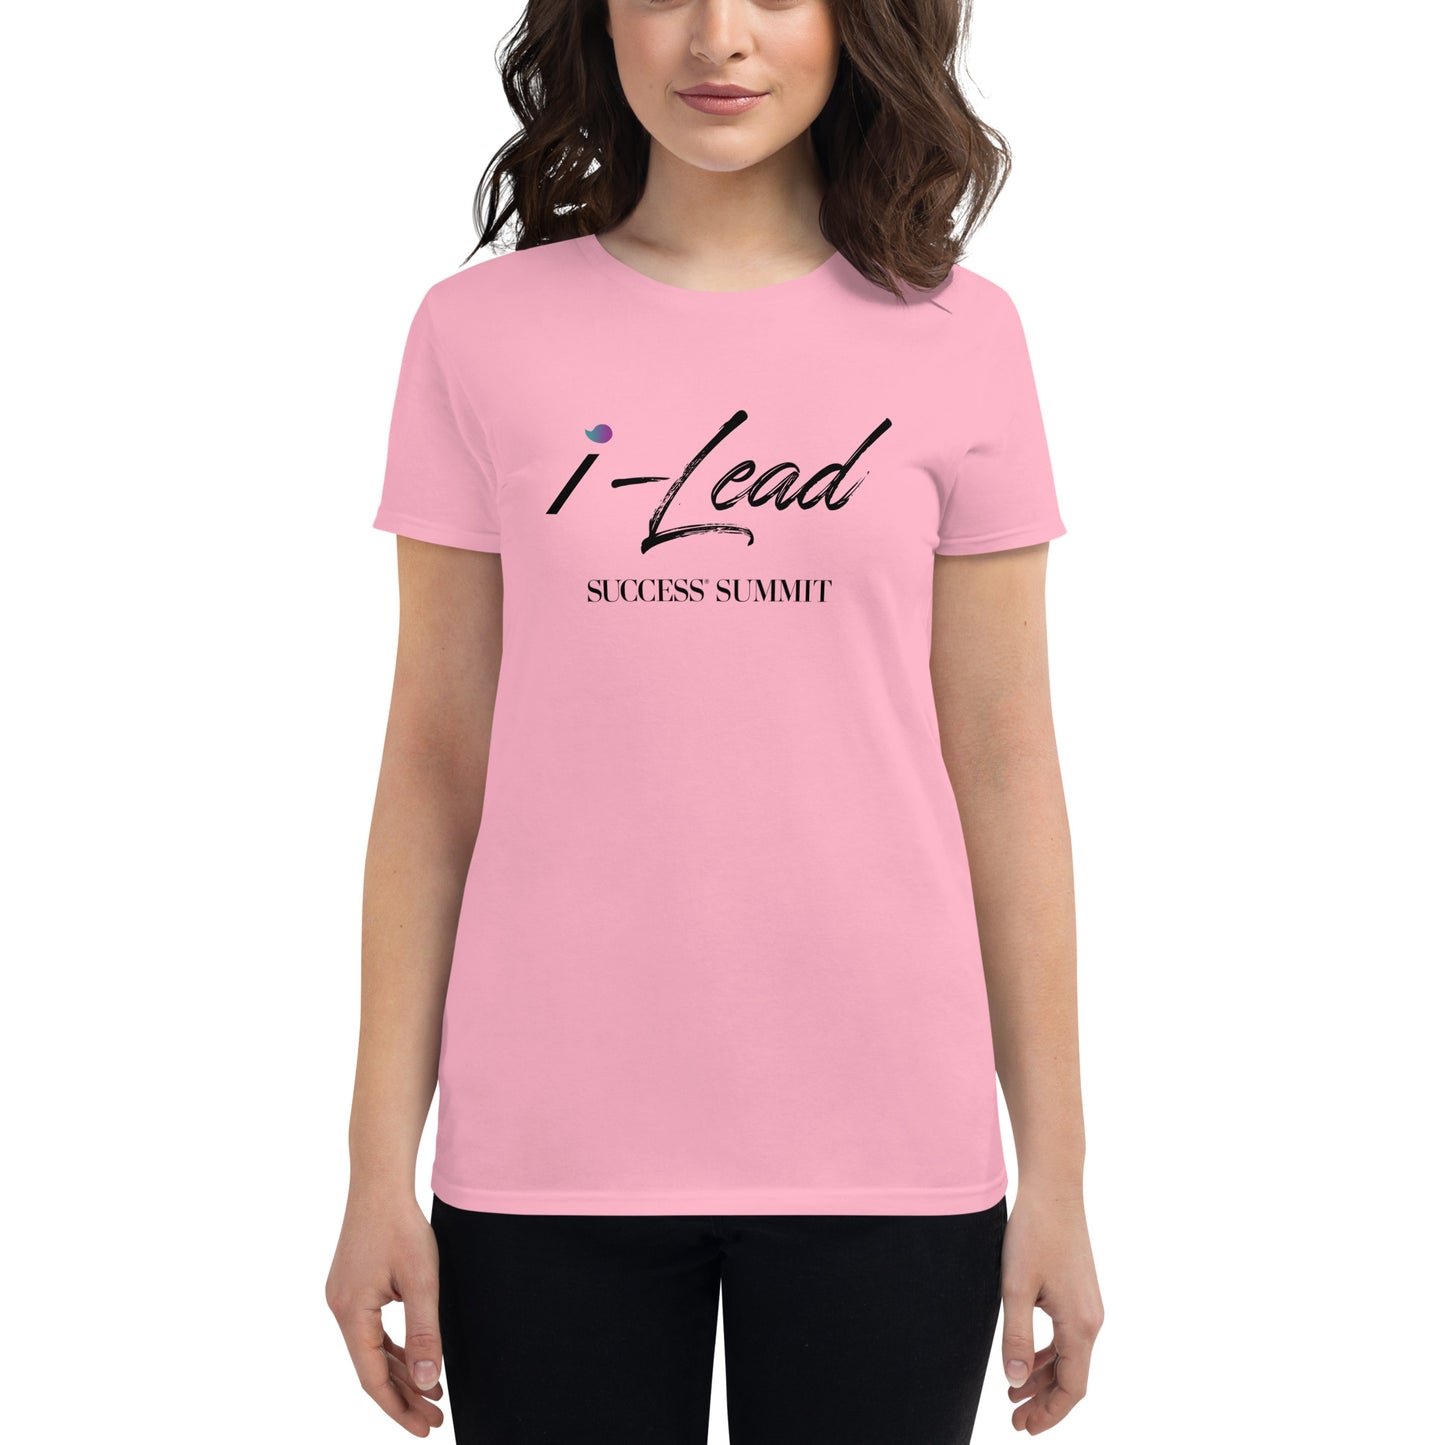 i-LEAD SUCCESS Summit women's short sleeve t-shirt